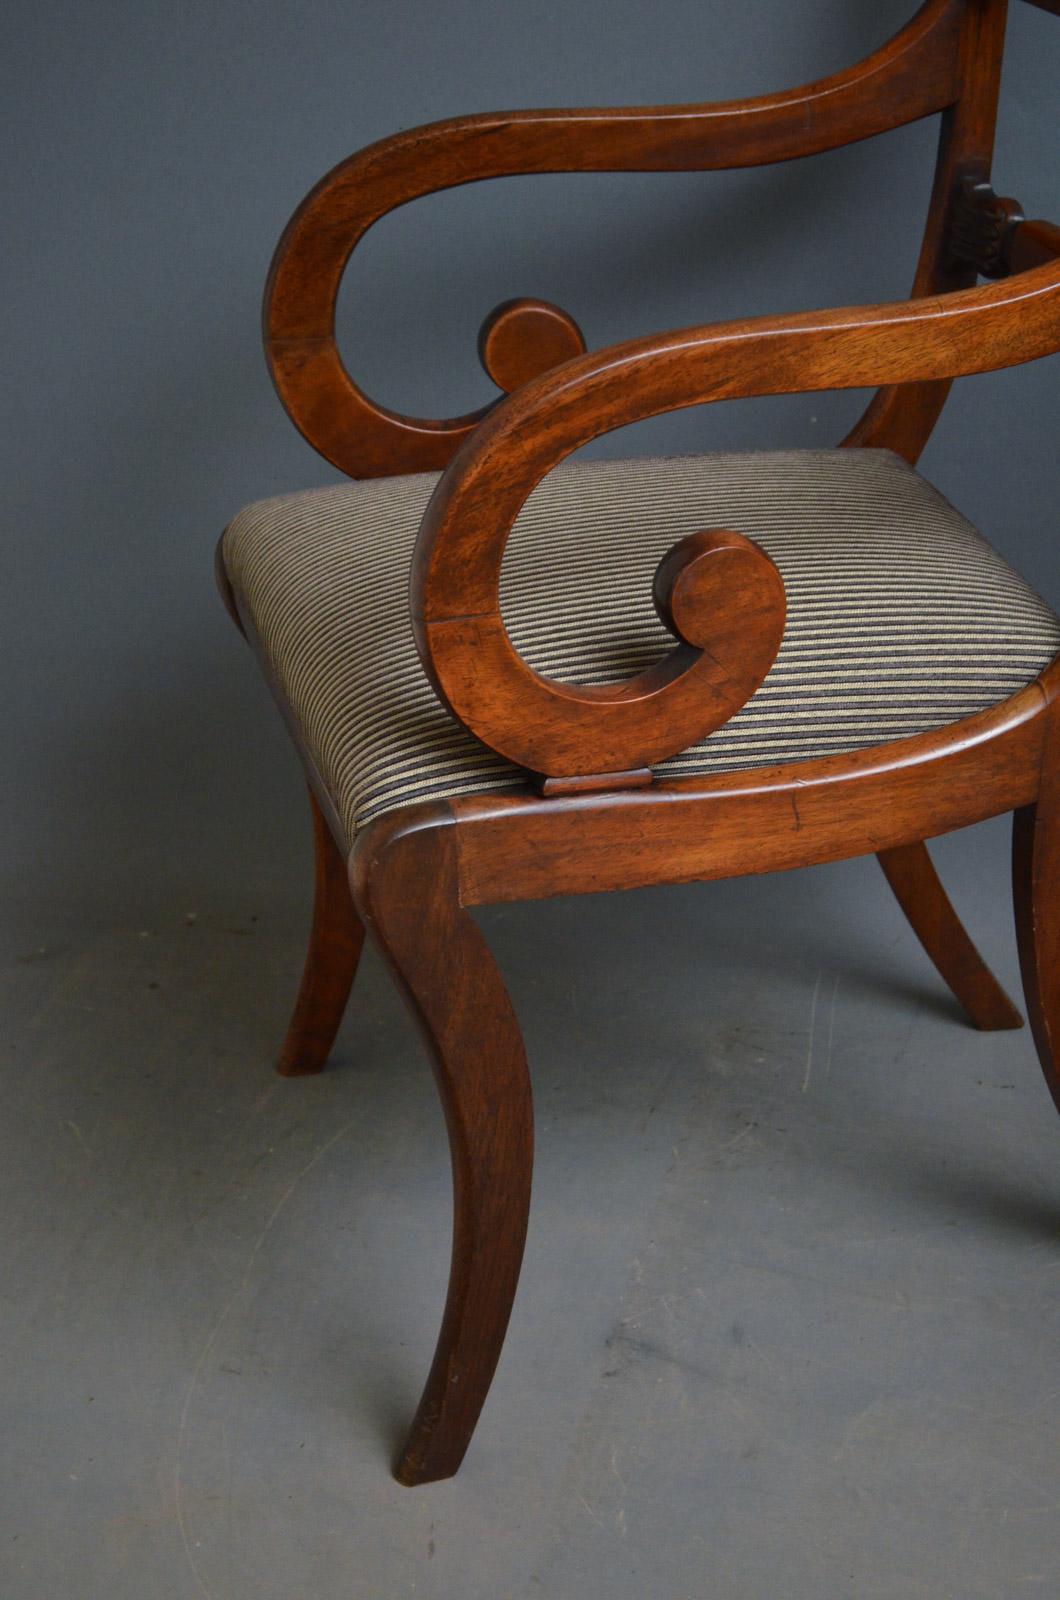 Pair of Regency Carver Chairs in Mahogany (Mahagoni)